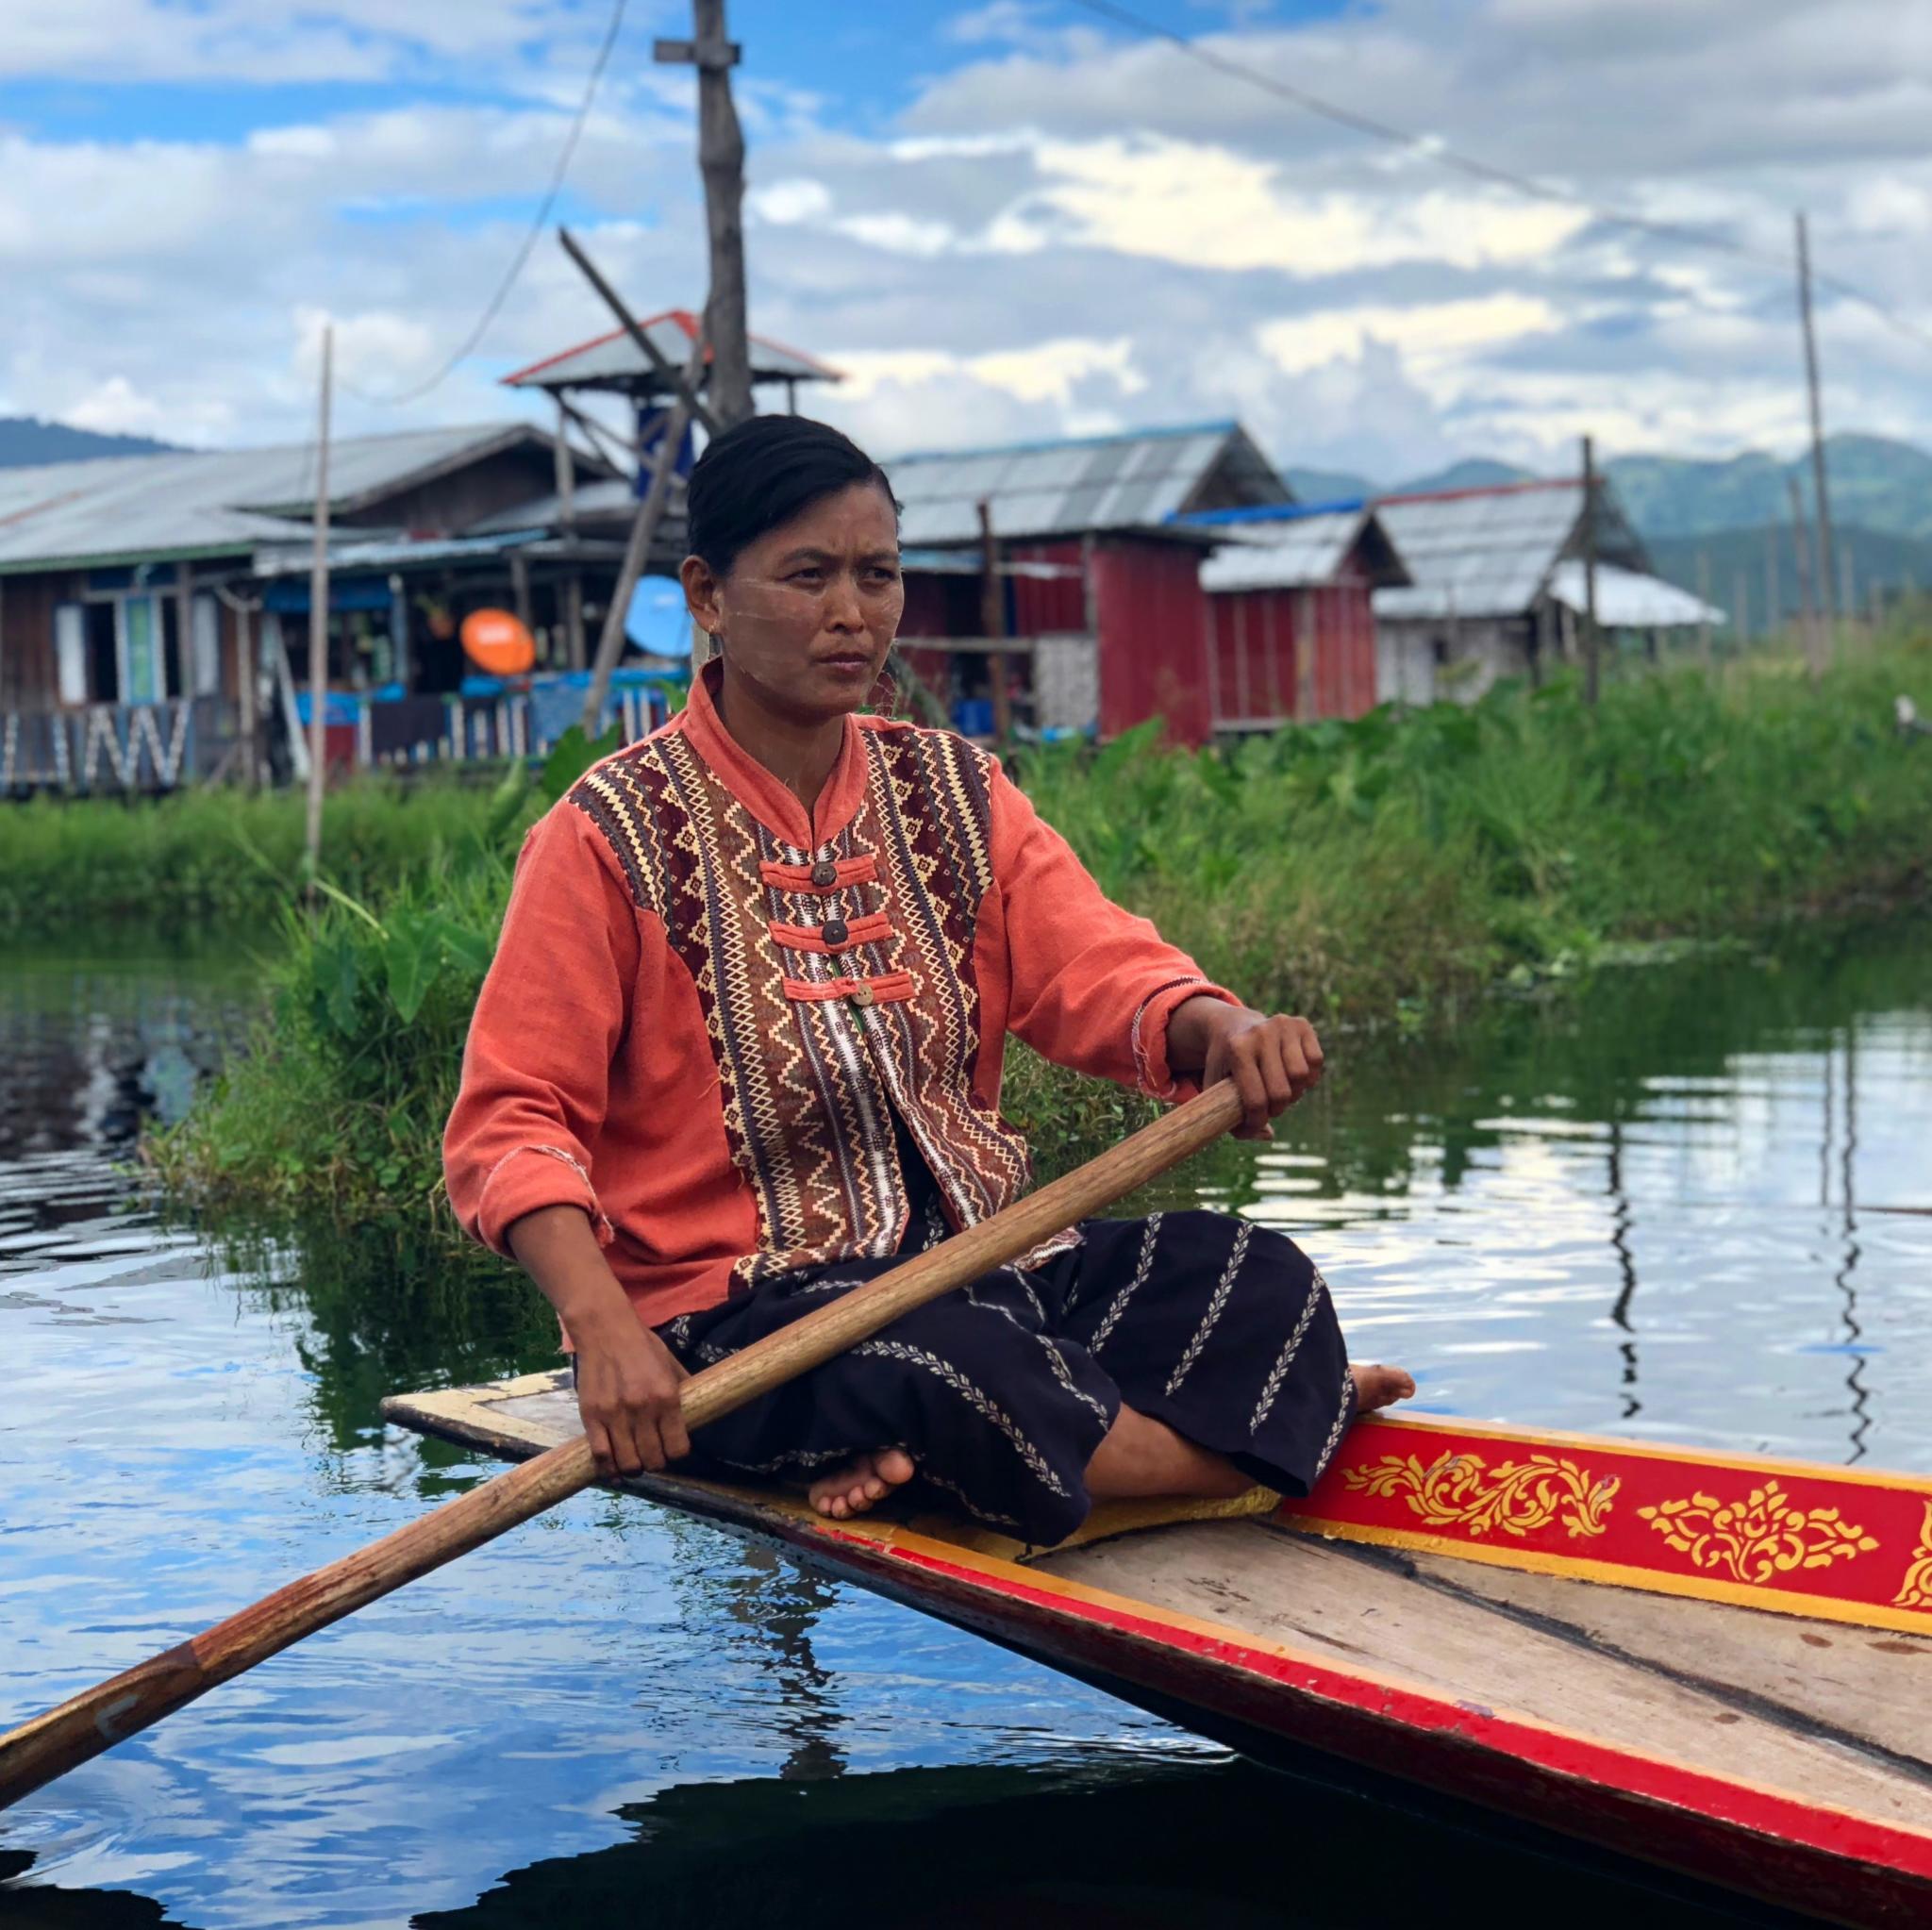 IlViaggiatoreMagazine-Donne guidano le "Inle Canoe Lady"-Lago Inle-Myanmar-Birmania